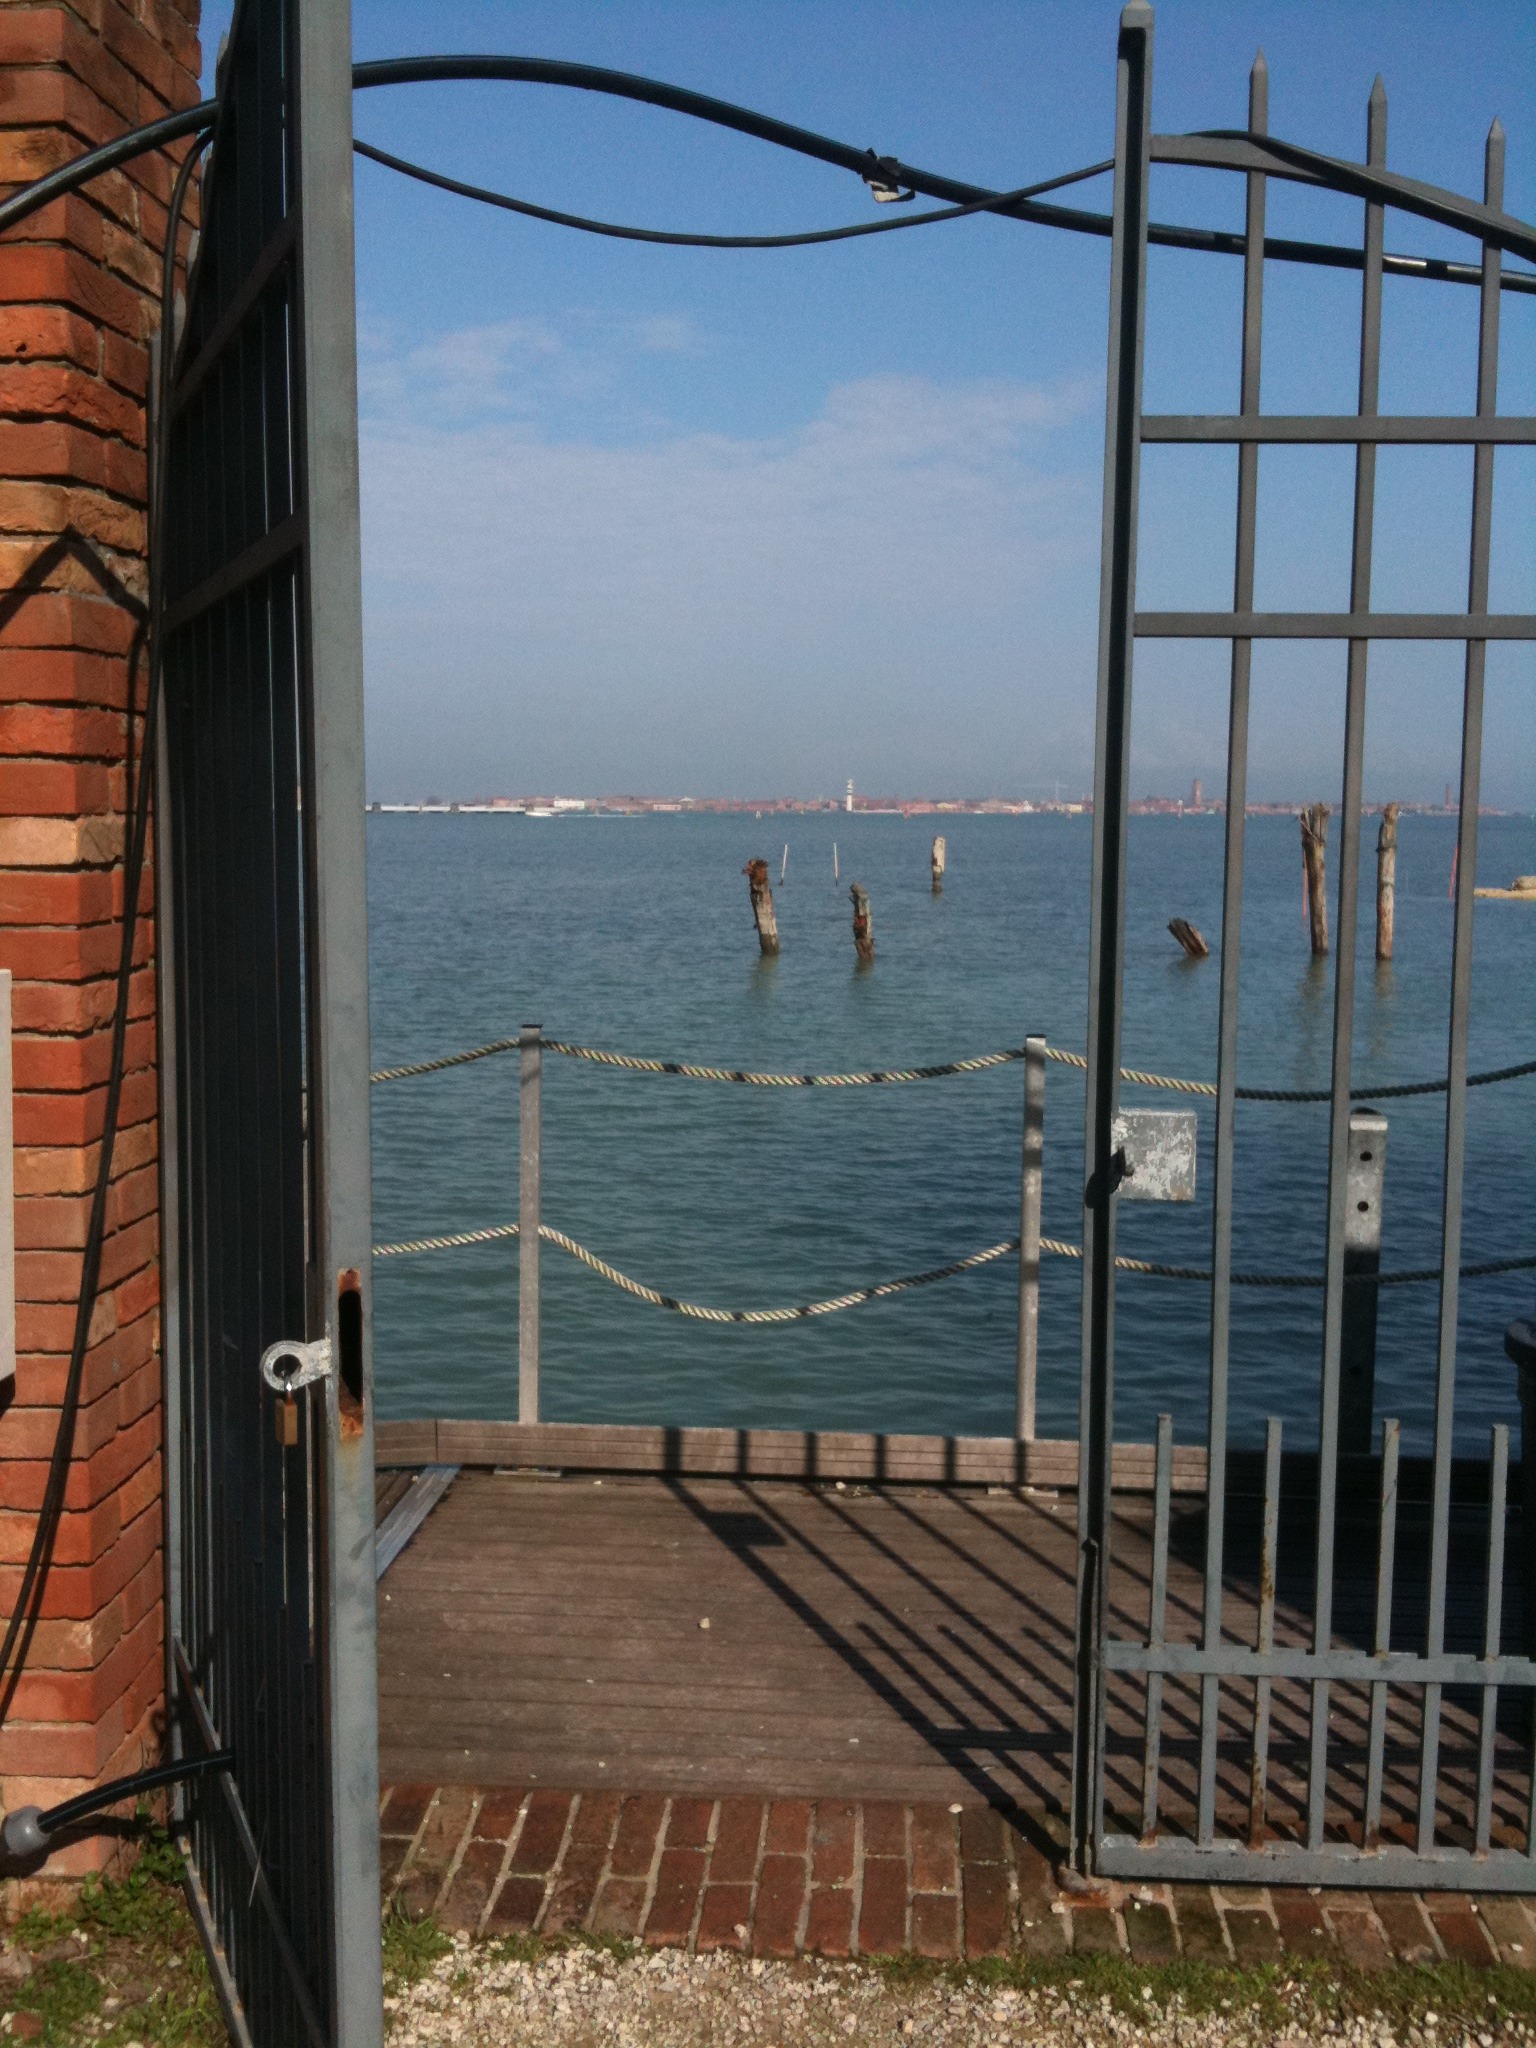 Kayaking Venice - Mobile Photos - Day 4